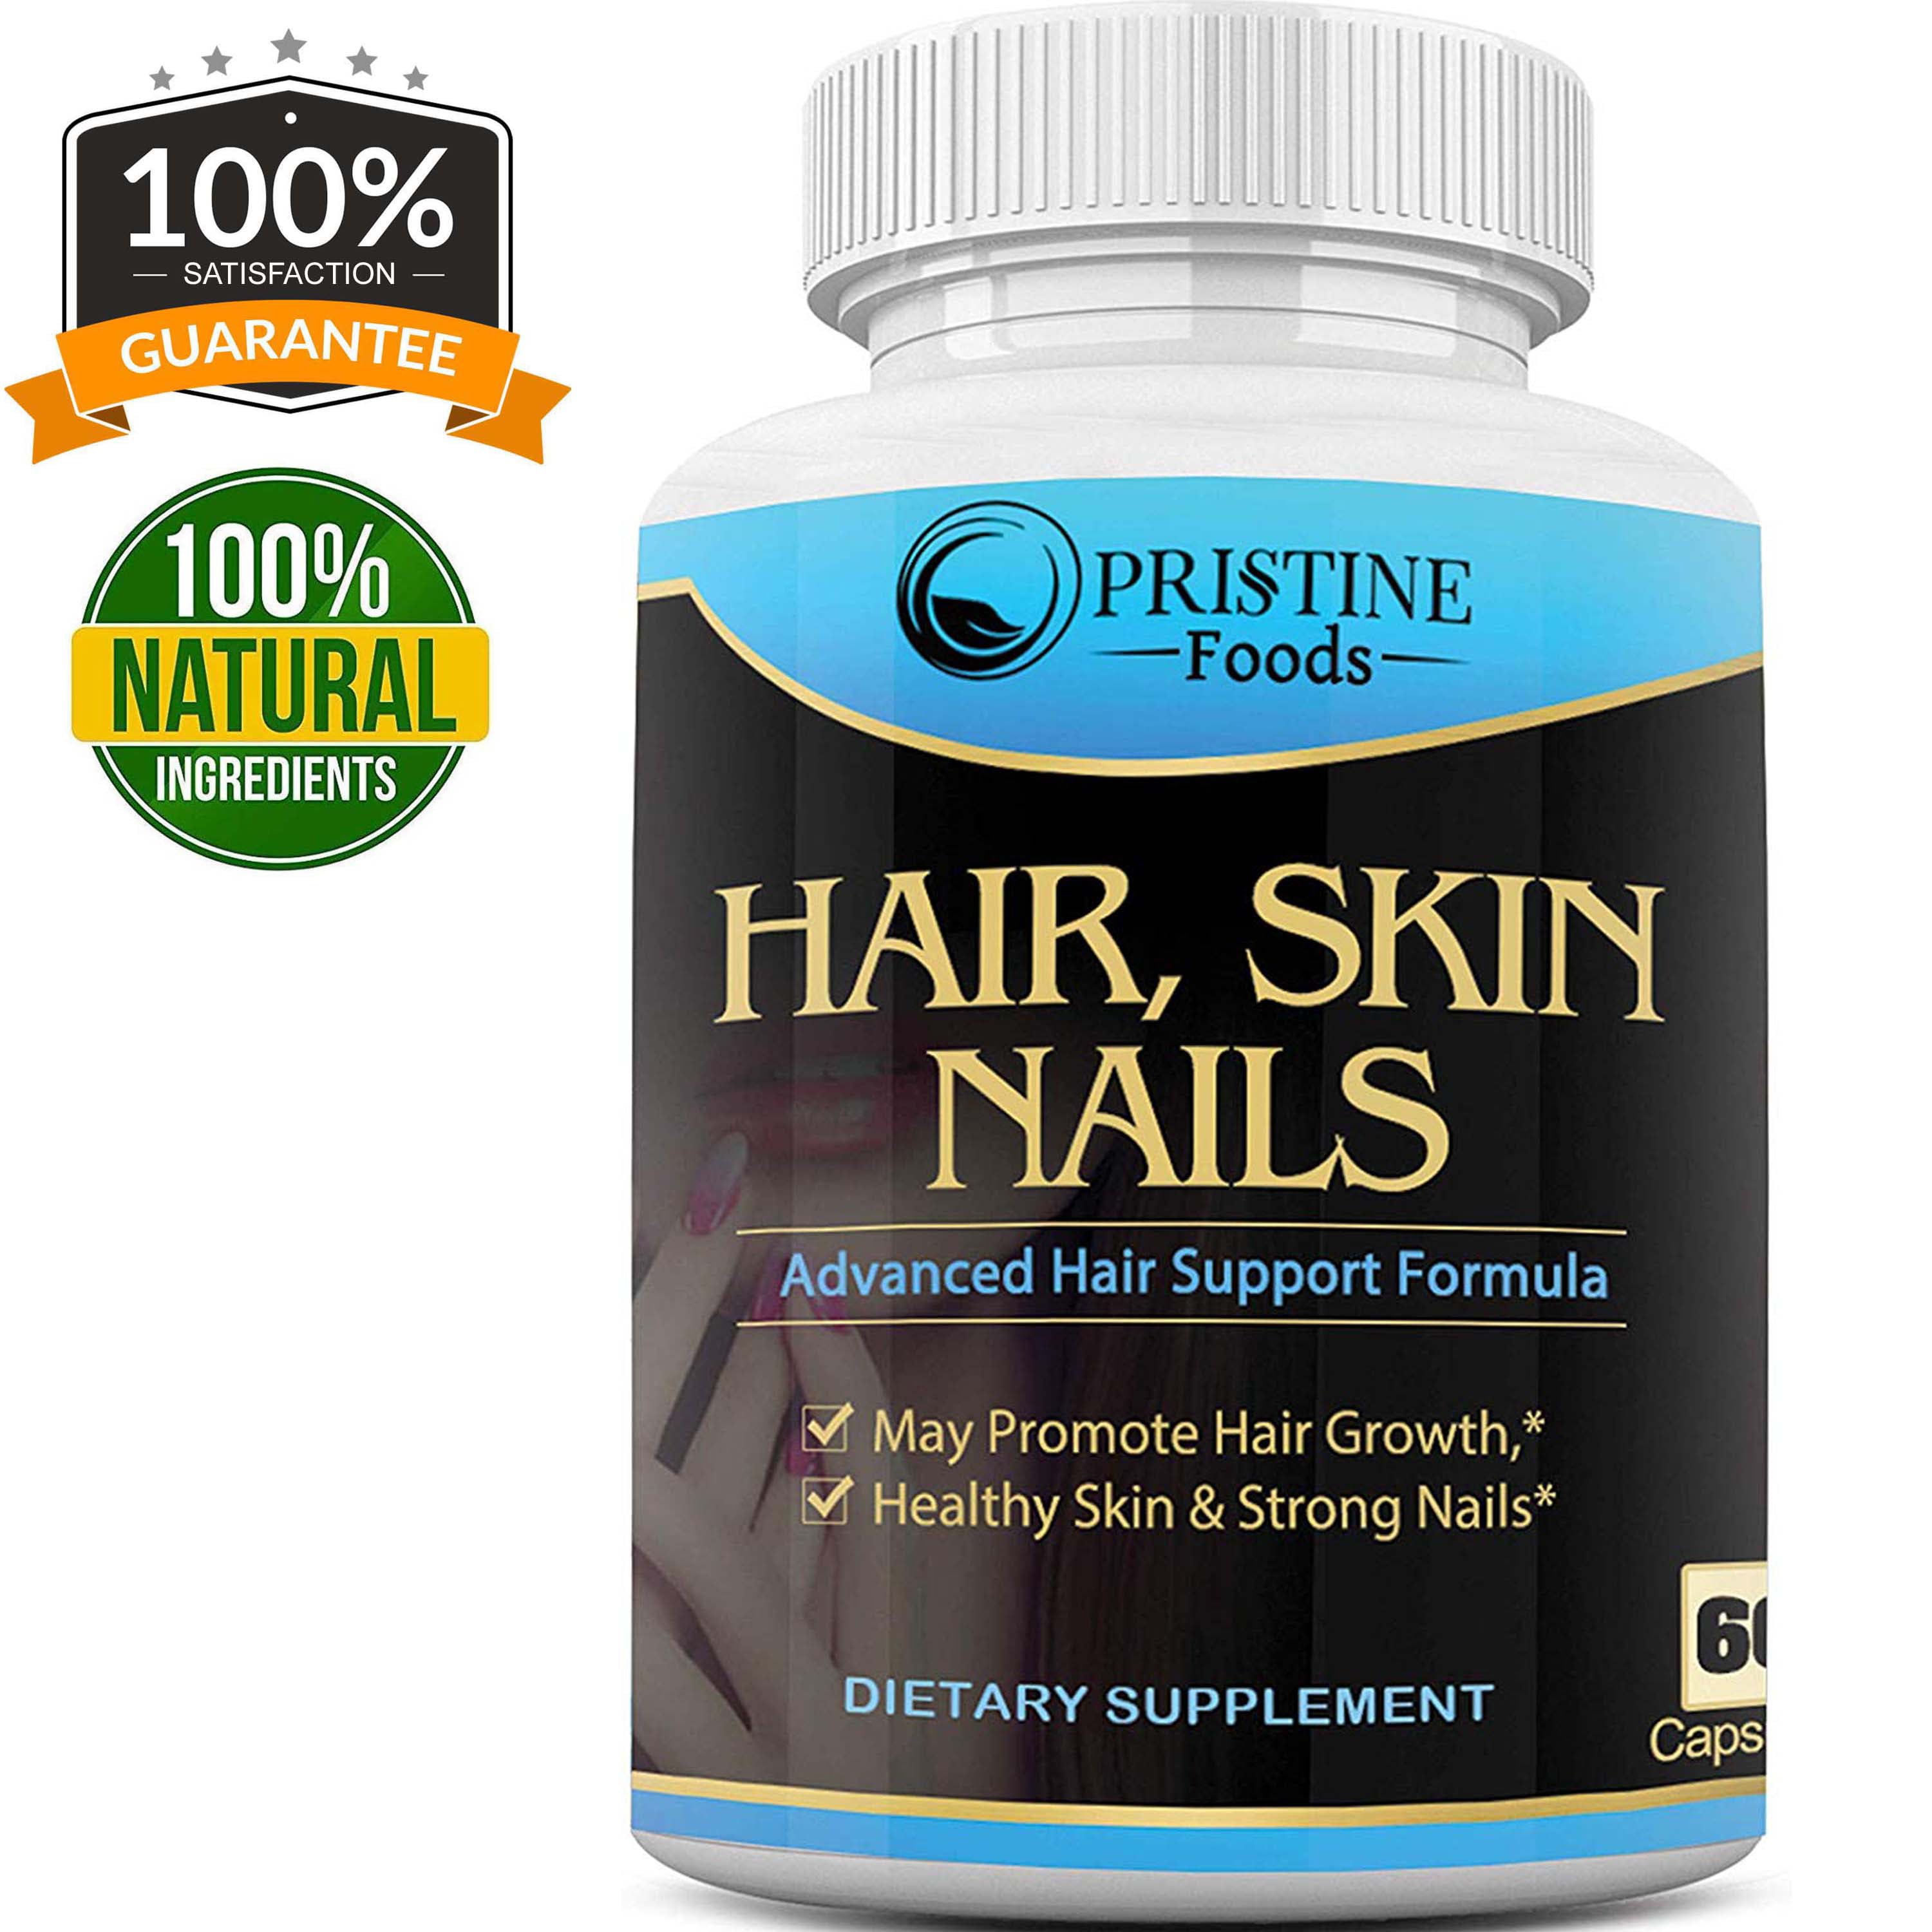 Pristine Food's Hair, Skin, Nails Vitamins – Biotin to Make Your Hair